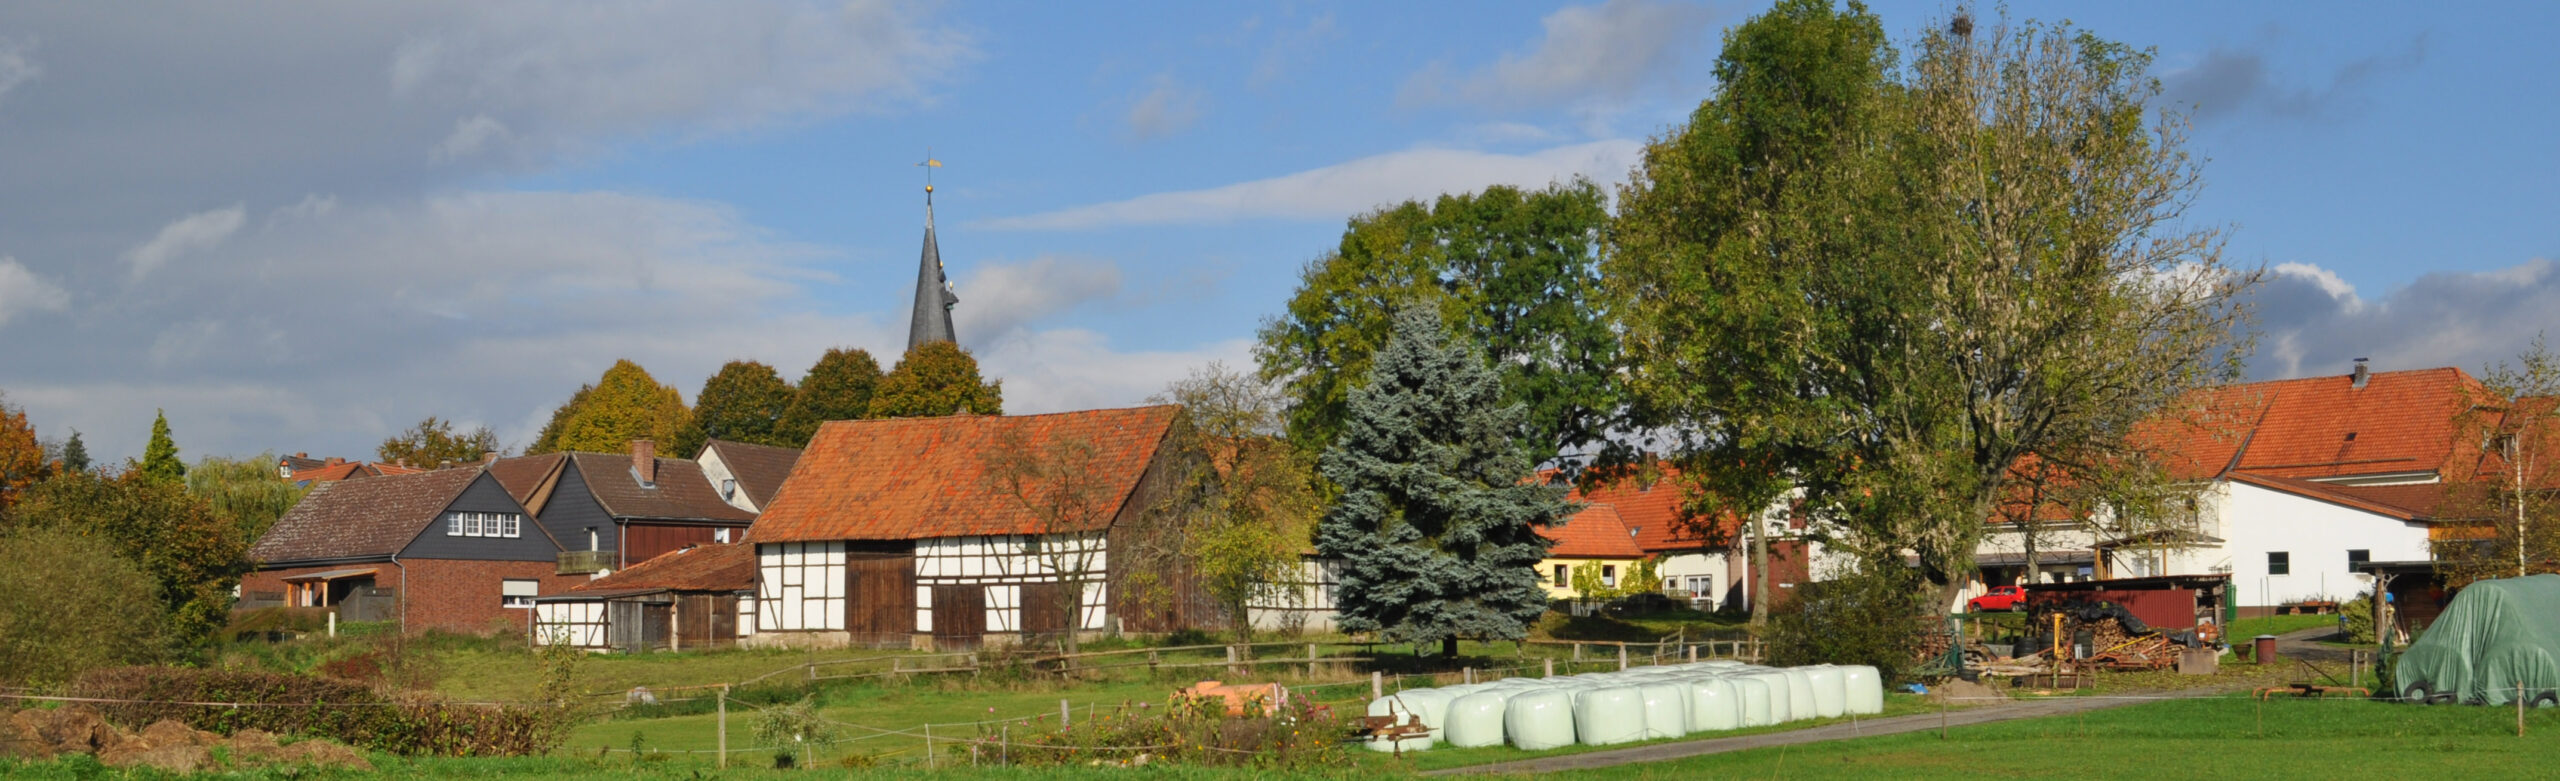 Dorf im Harzvorland